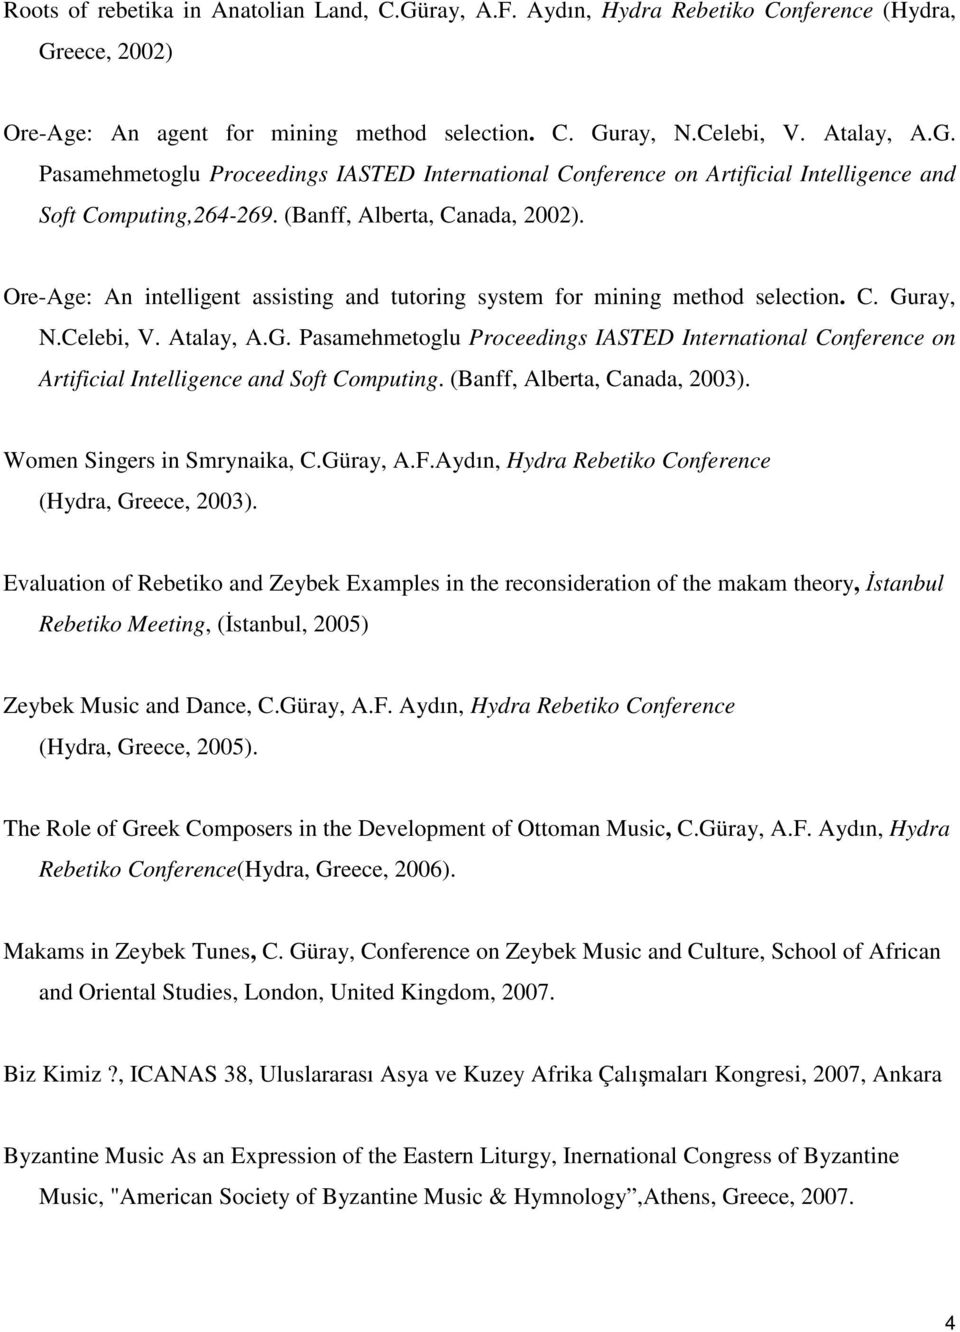 ray, N.Celebi, V. Atalay, A.G. Pasamehmetoglu Proceedings IASTED International Conference on Artificial Intelligence and Soft Computing. (Banff, Alberta, Canada, 2003). Women Singers in Smrynaika, C.